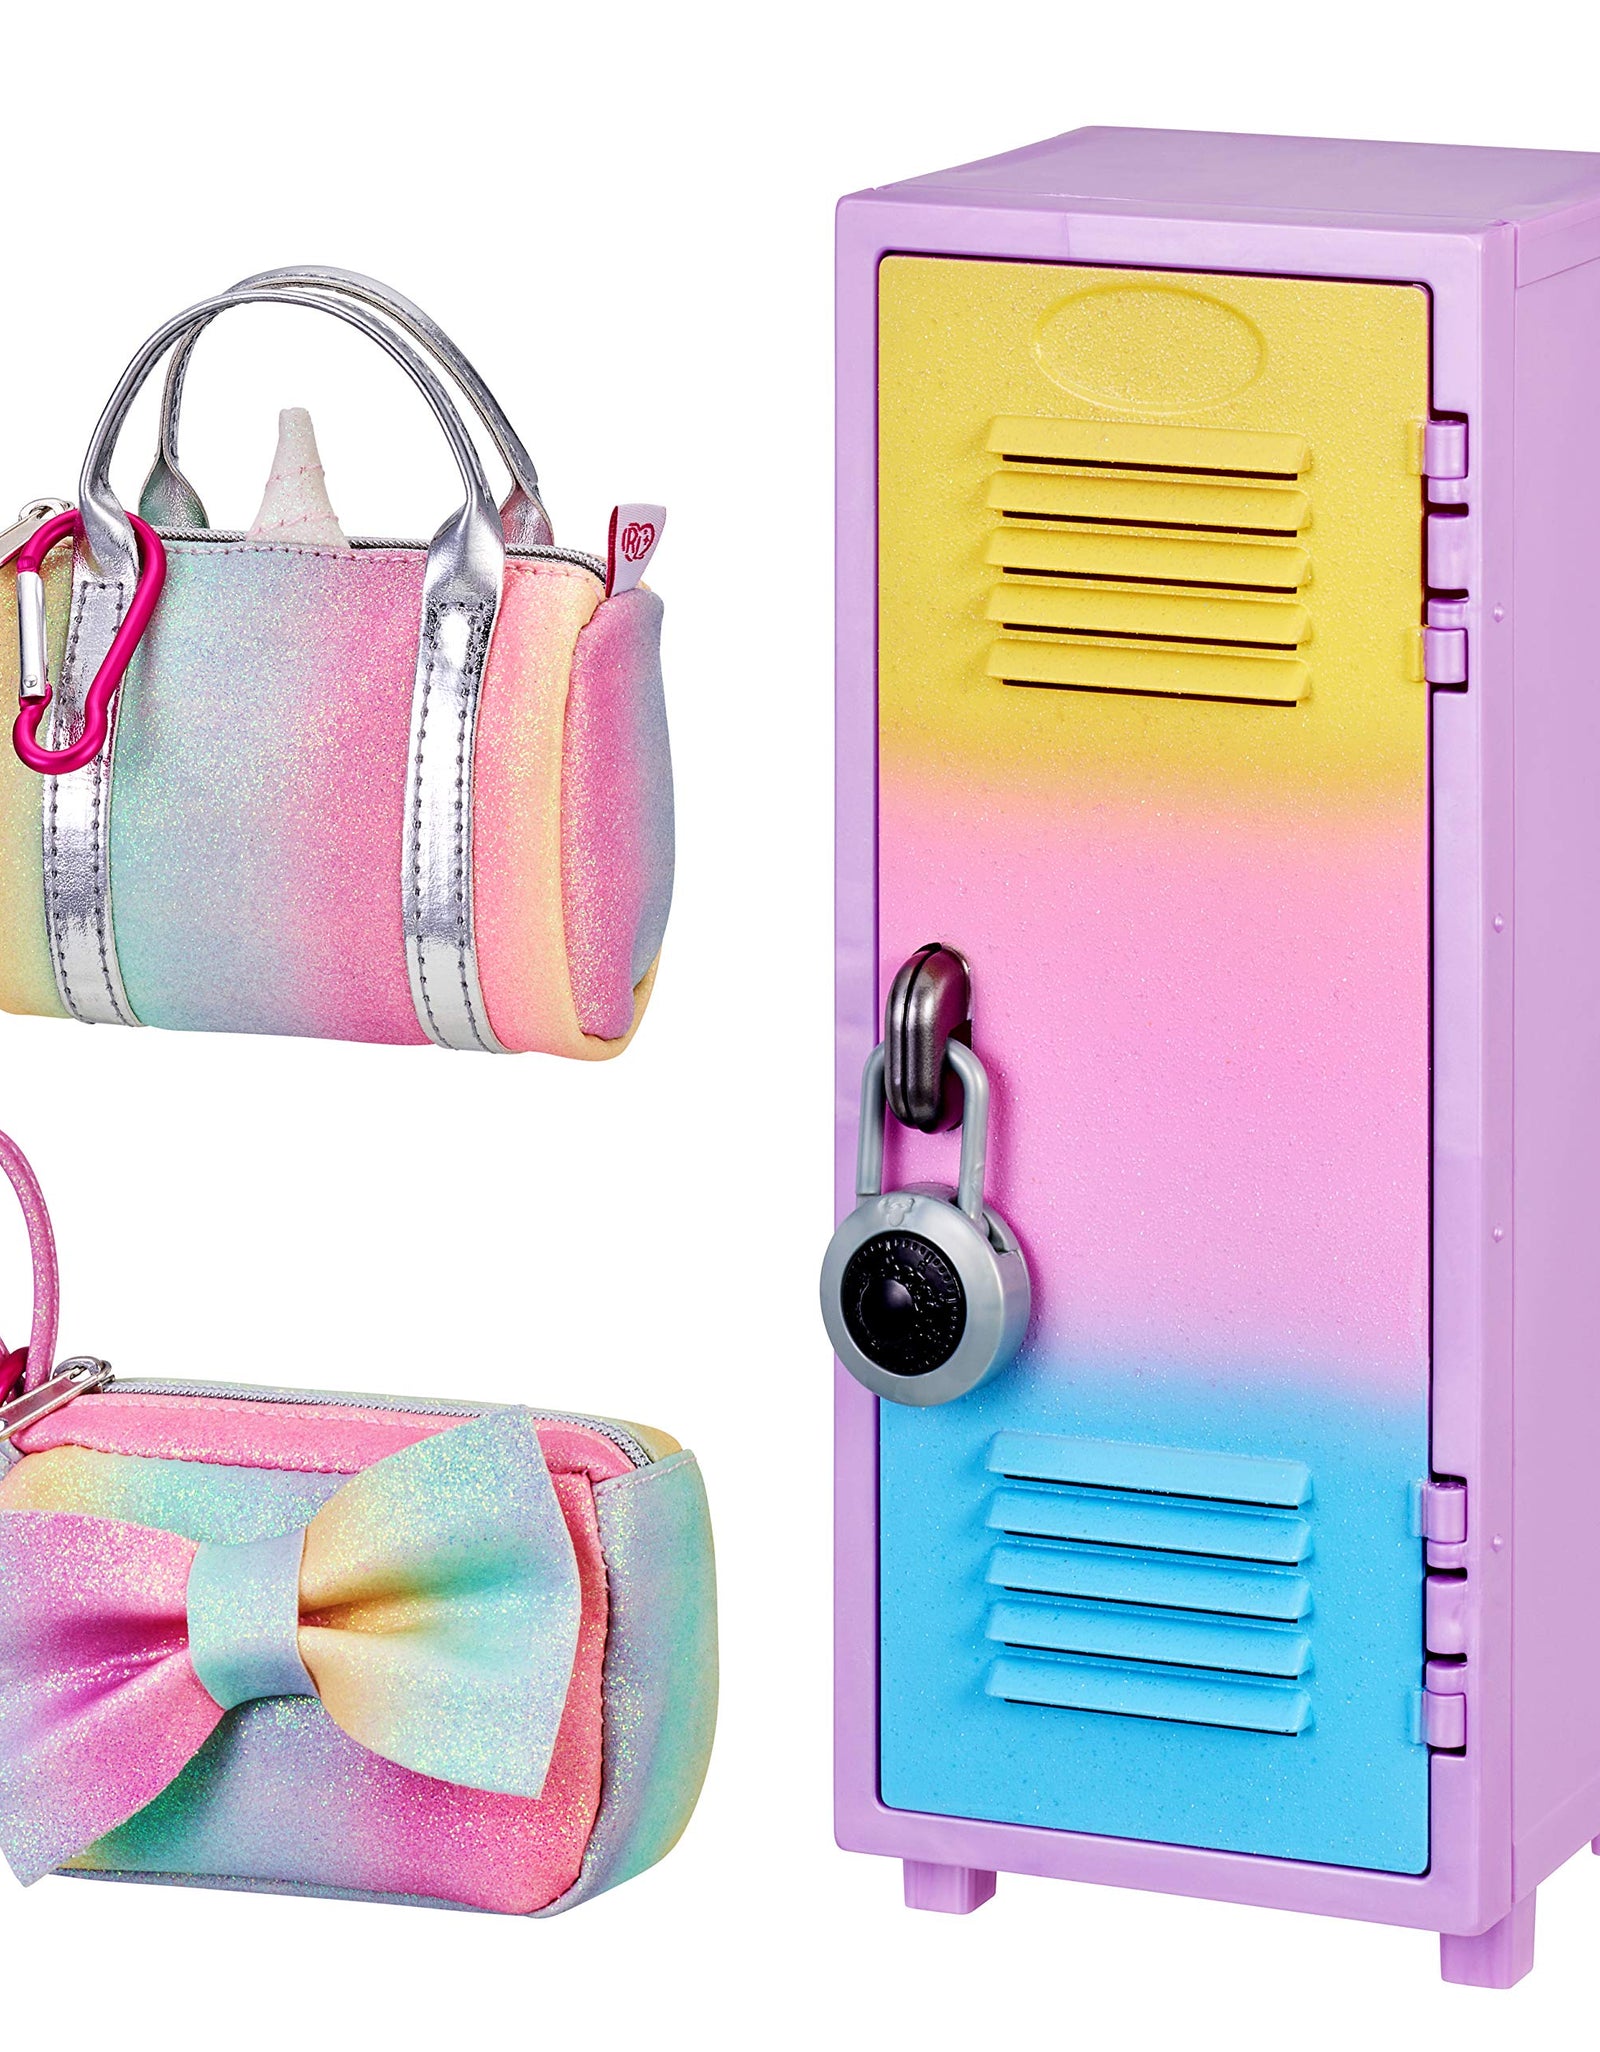 REAL LITTLES Locker + Handbag Bundle Pack! Each Pack Contains an Exclusive Locker, Duffle Bag + 15 Surprises Plus an Exclusive Handbag and Surprises from The Handbag Range (25286)